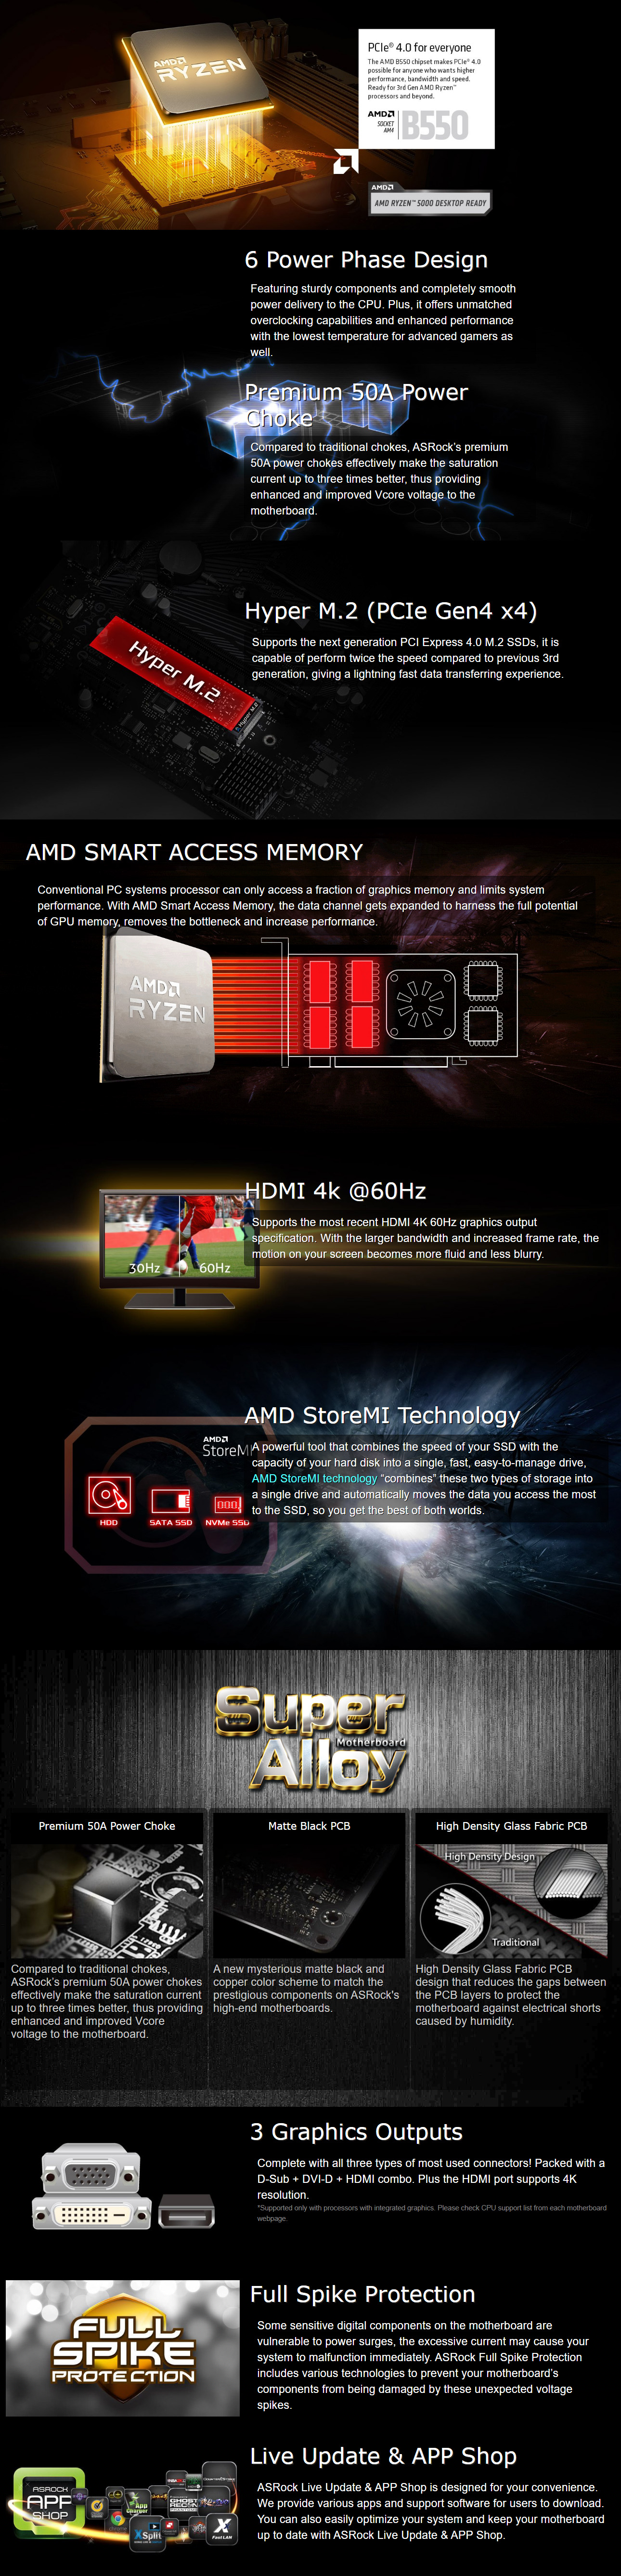 AMD-AM4-Asrock-B550M-HDV-AM4-mATX-Motherboard-1